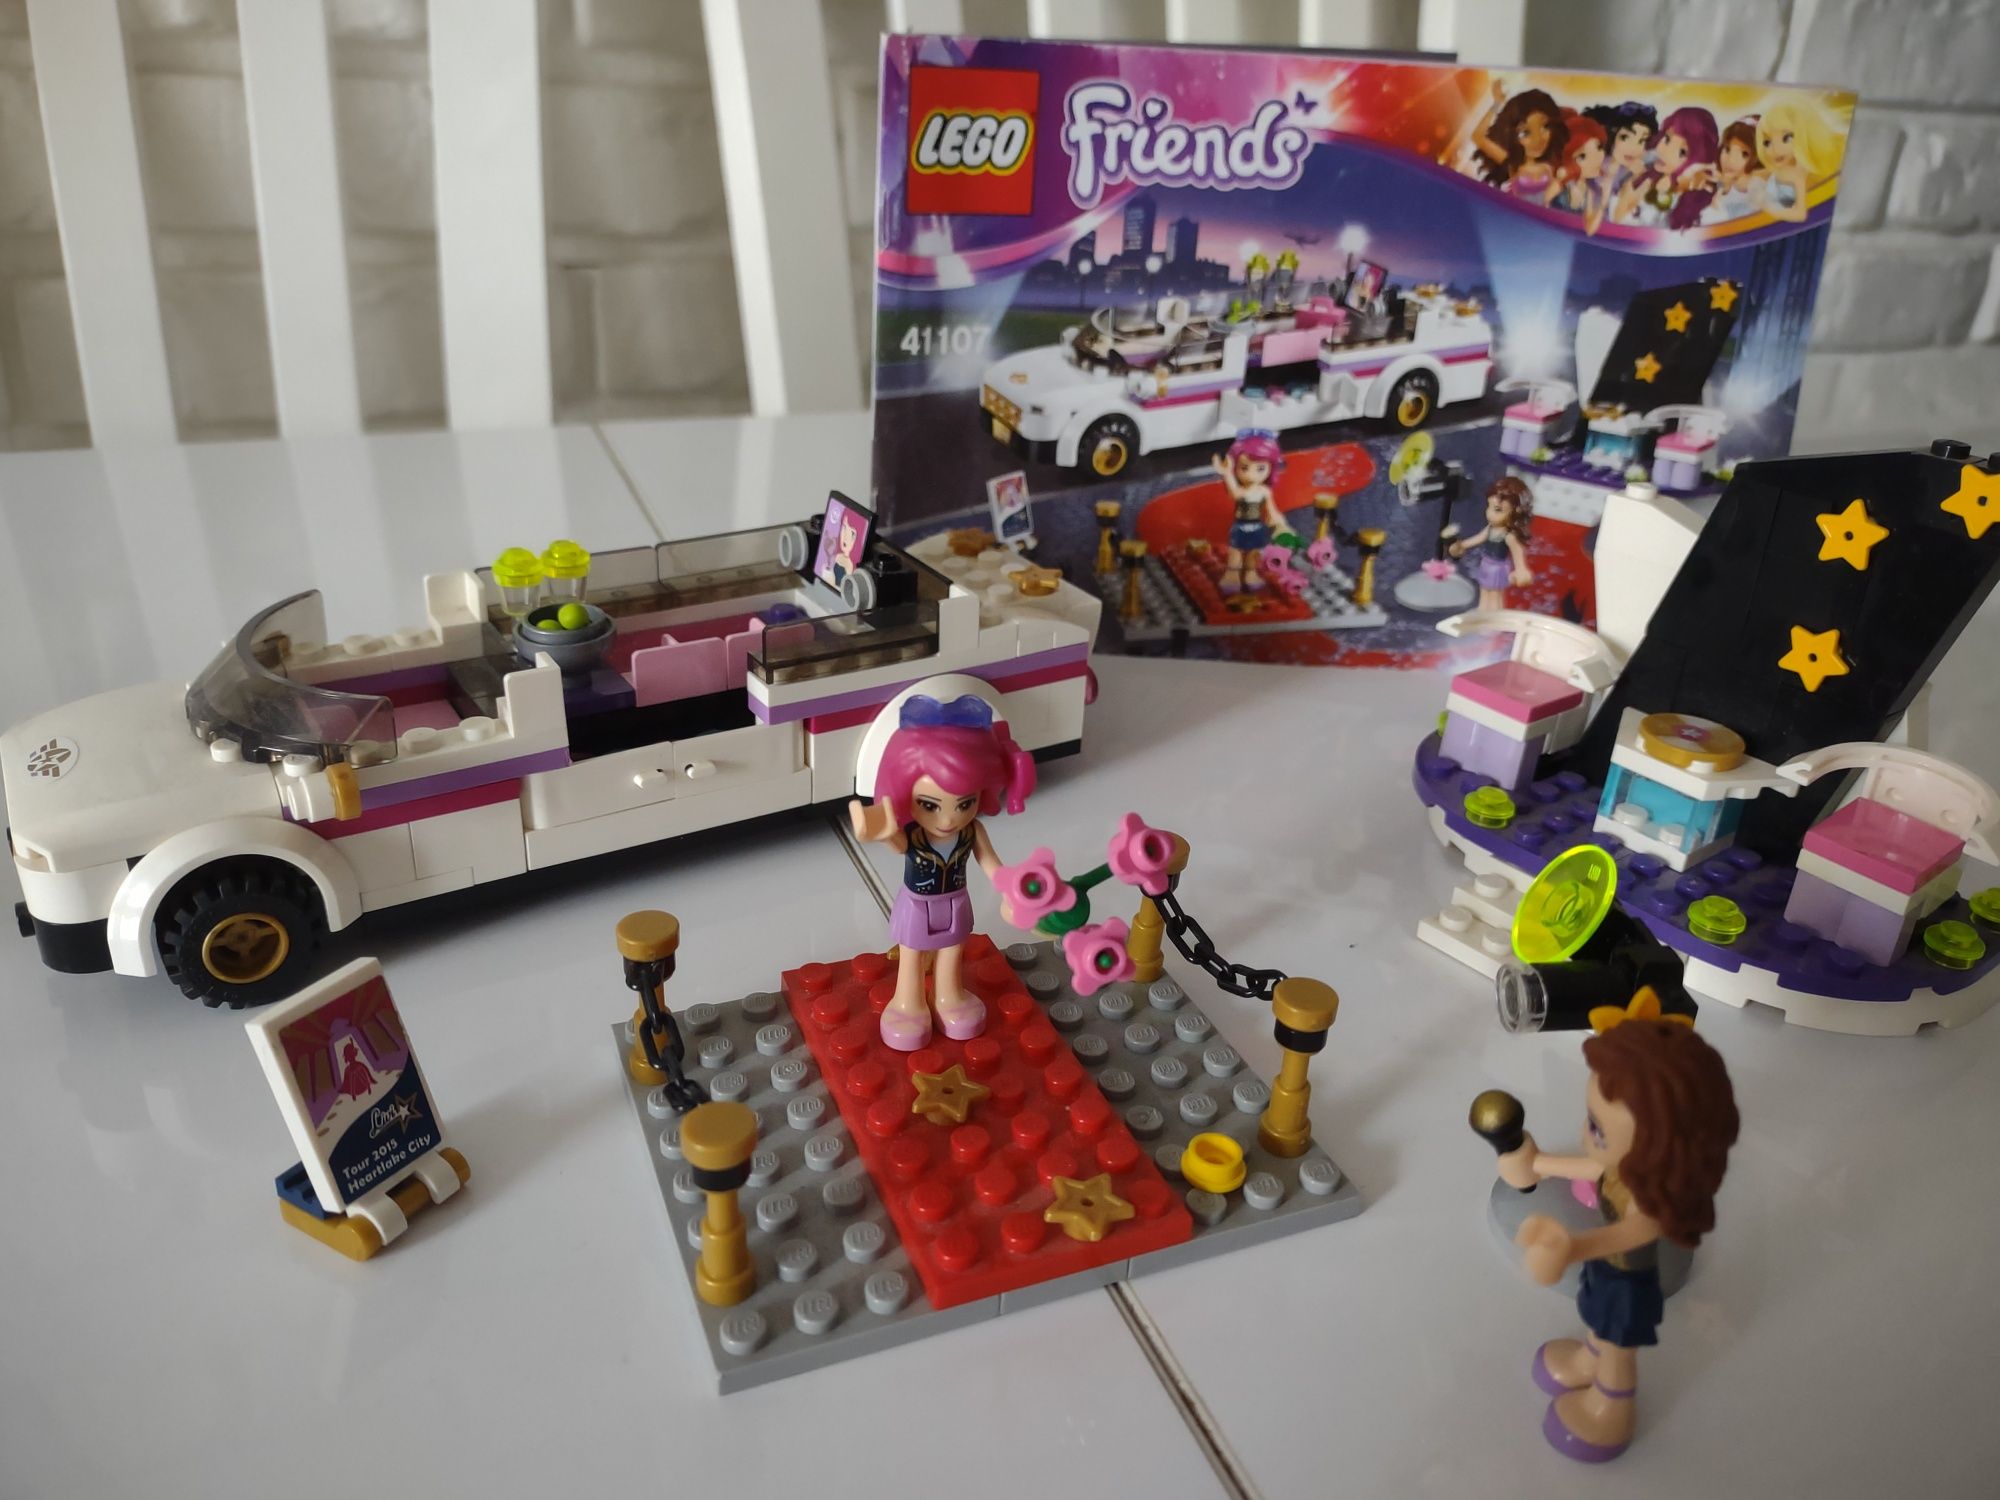 LEGO friends 41107